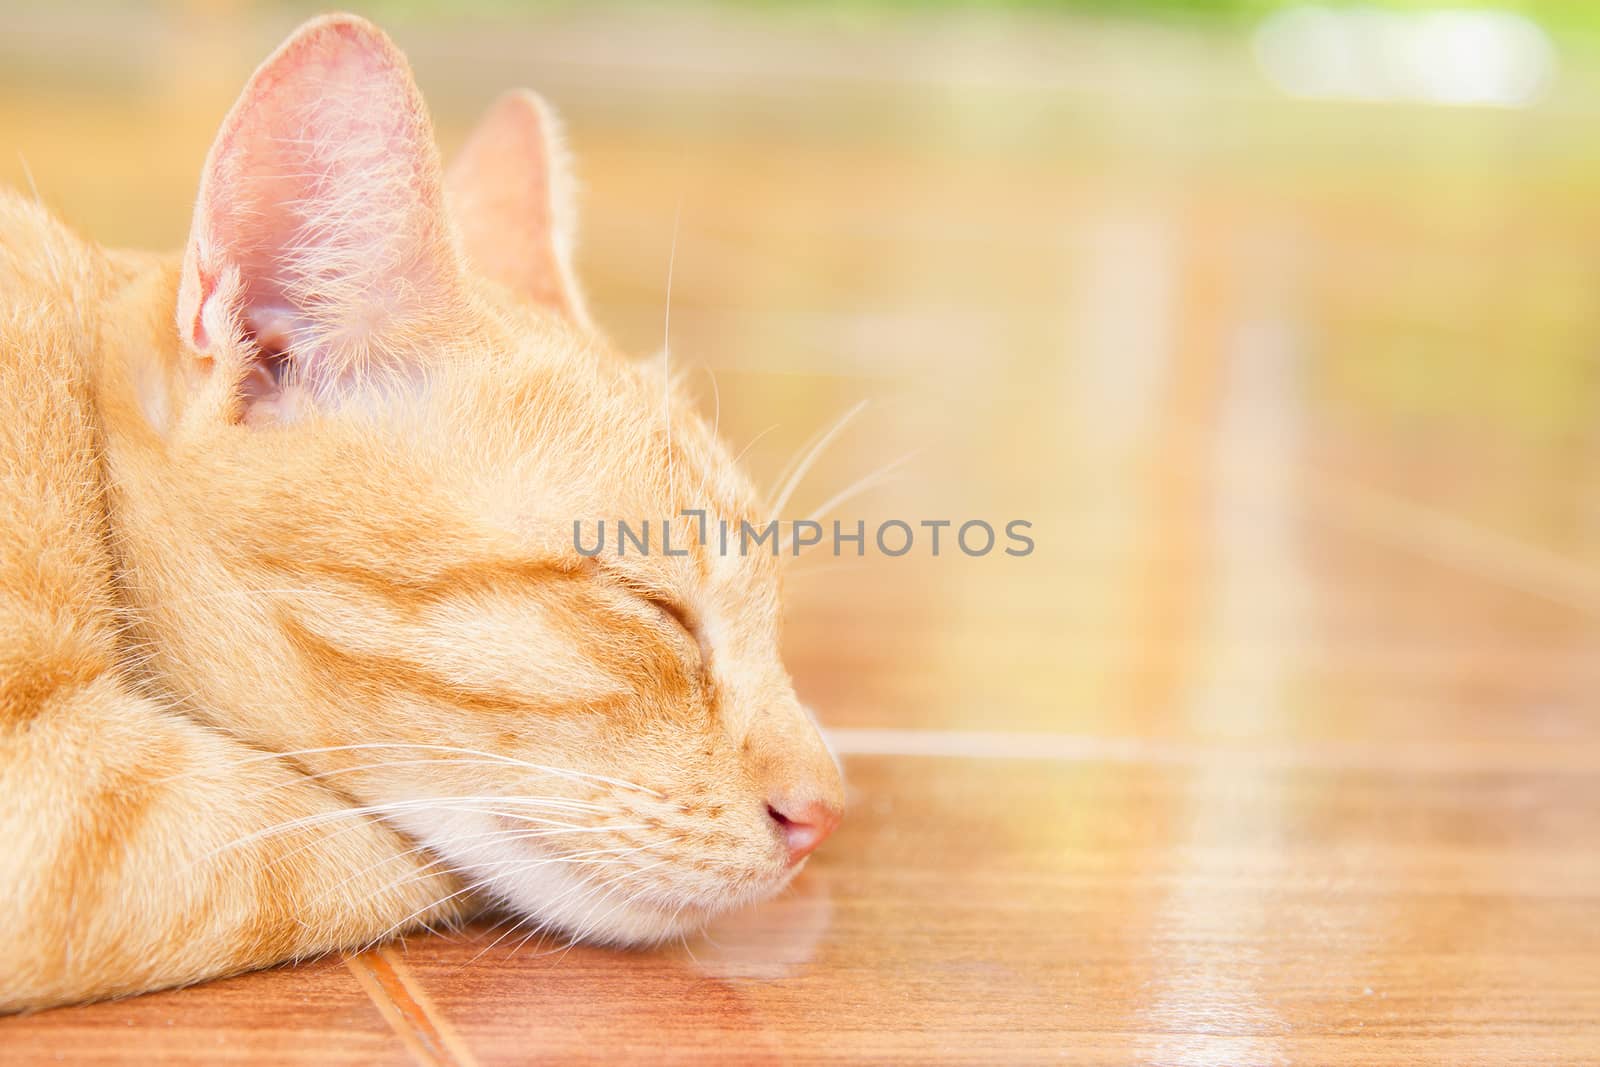 Cat sleeping on an orange tile floor.